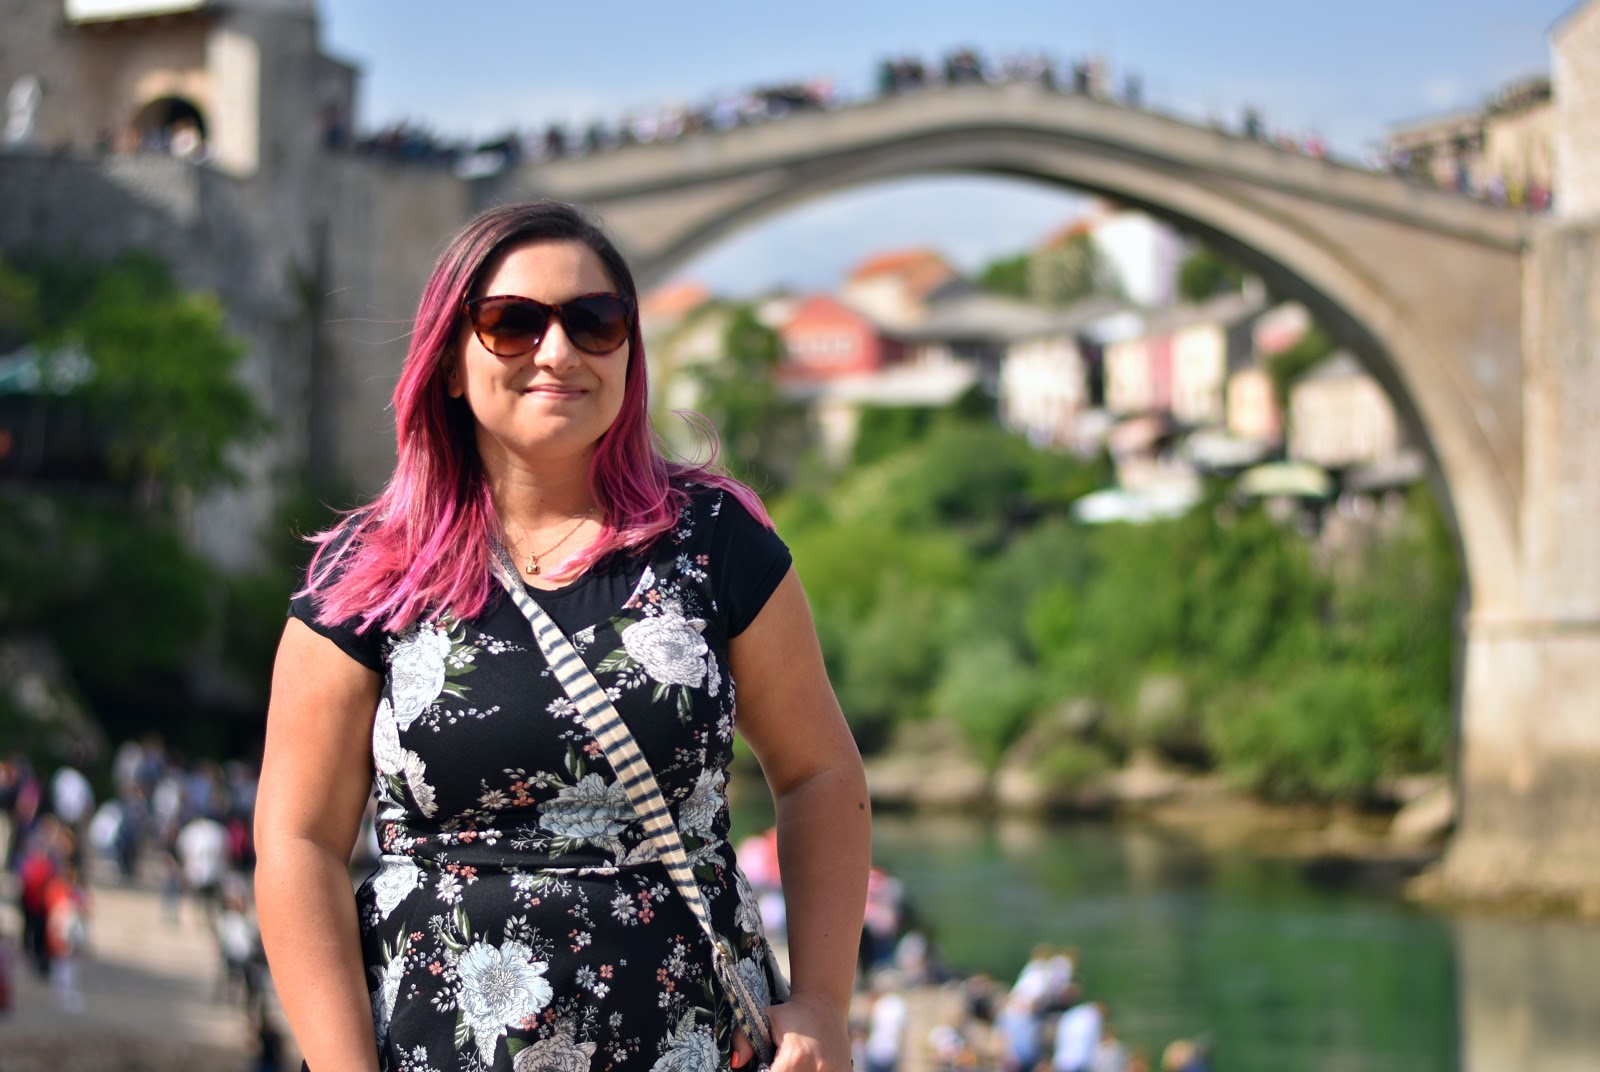 Mostar bosnia